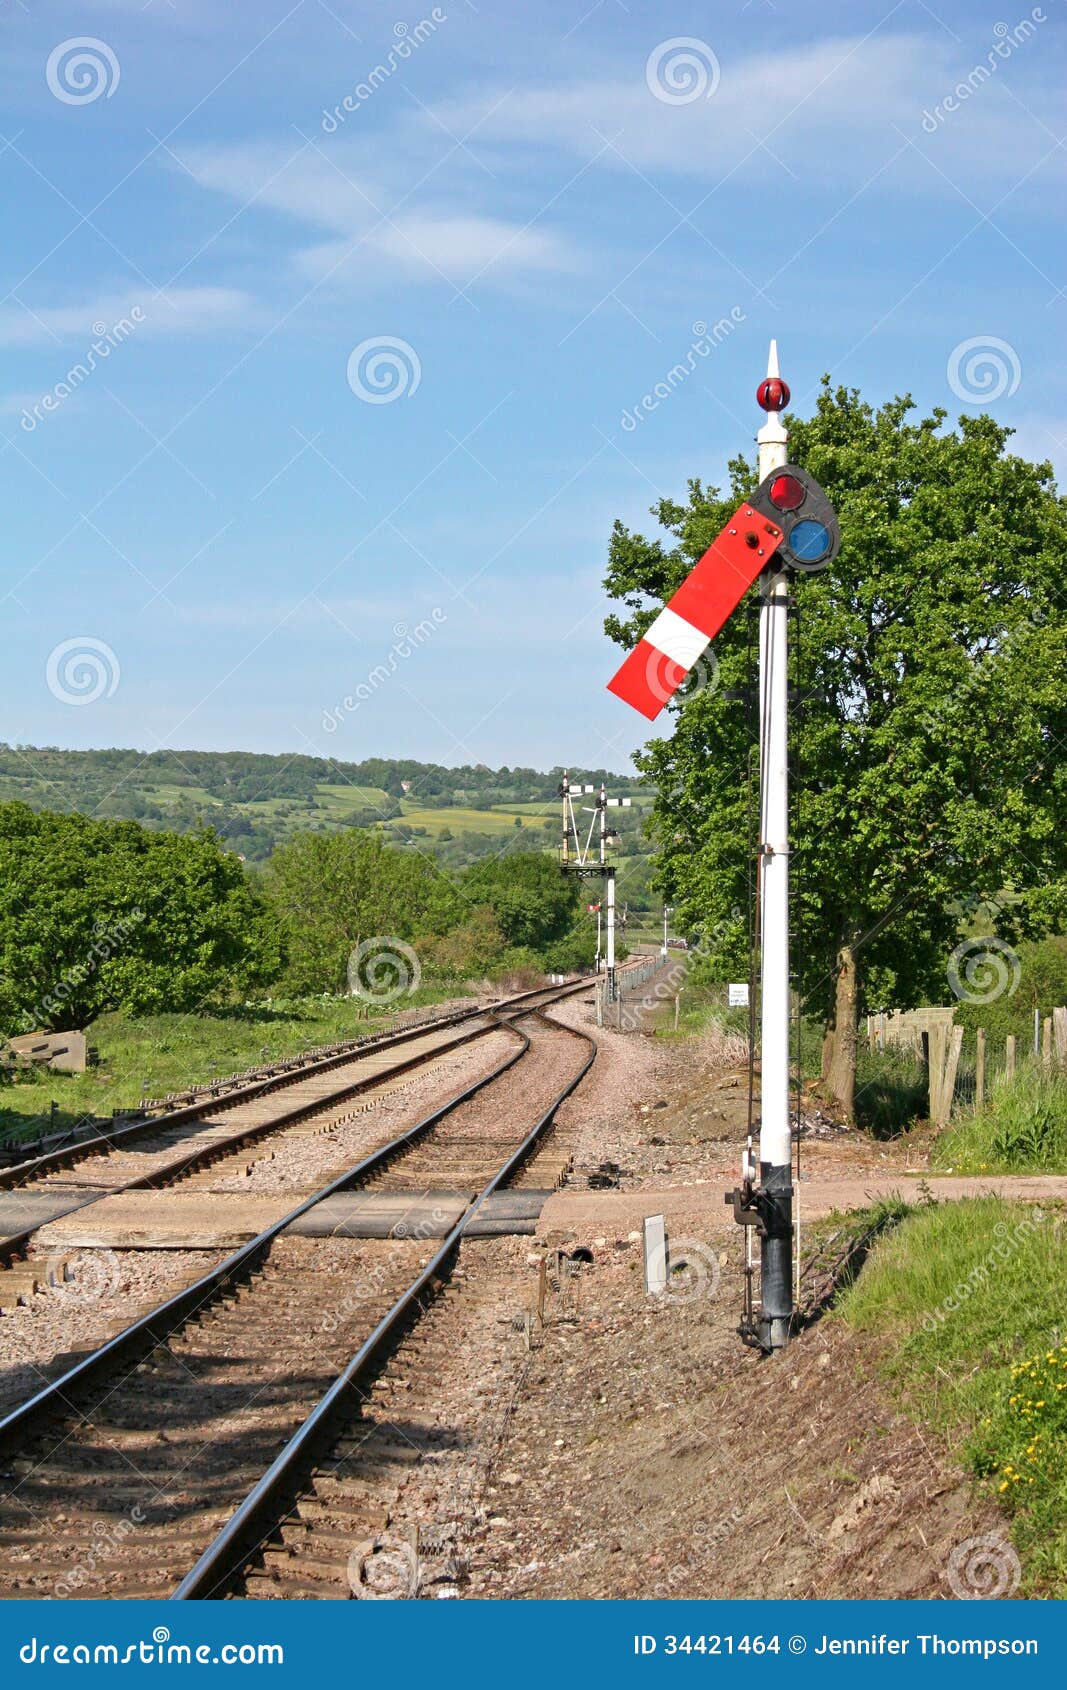 Railway Track Stock Images - Image: 34421464